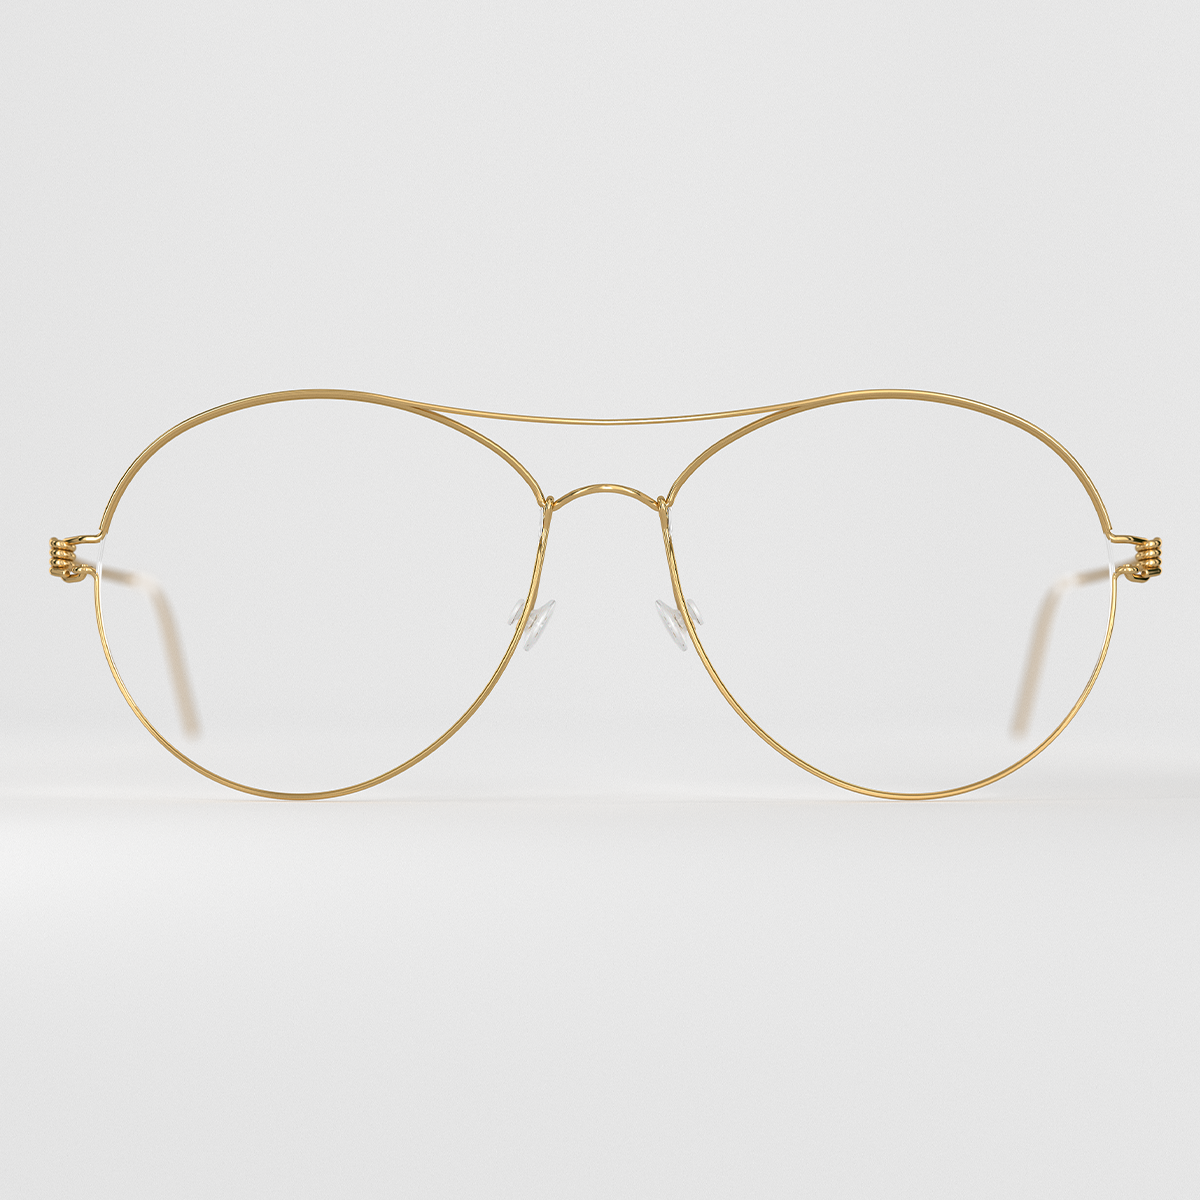 LINDBERG gold tone round glasses Model April featuring a double bar bridge